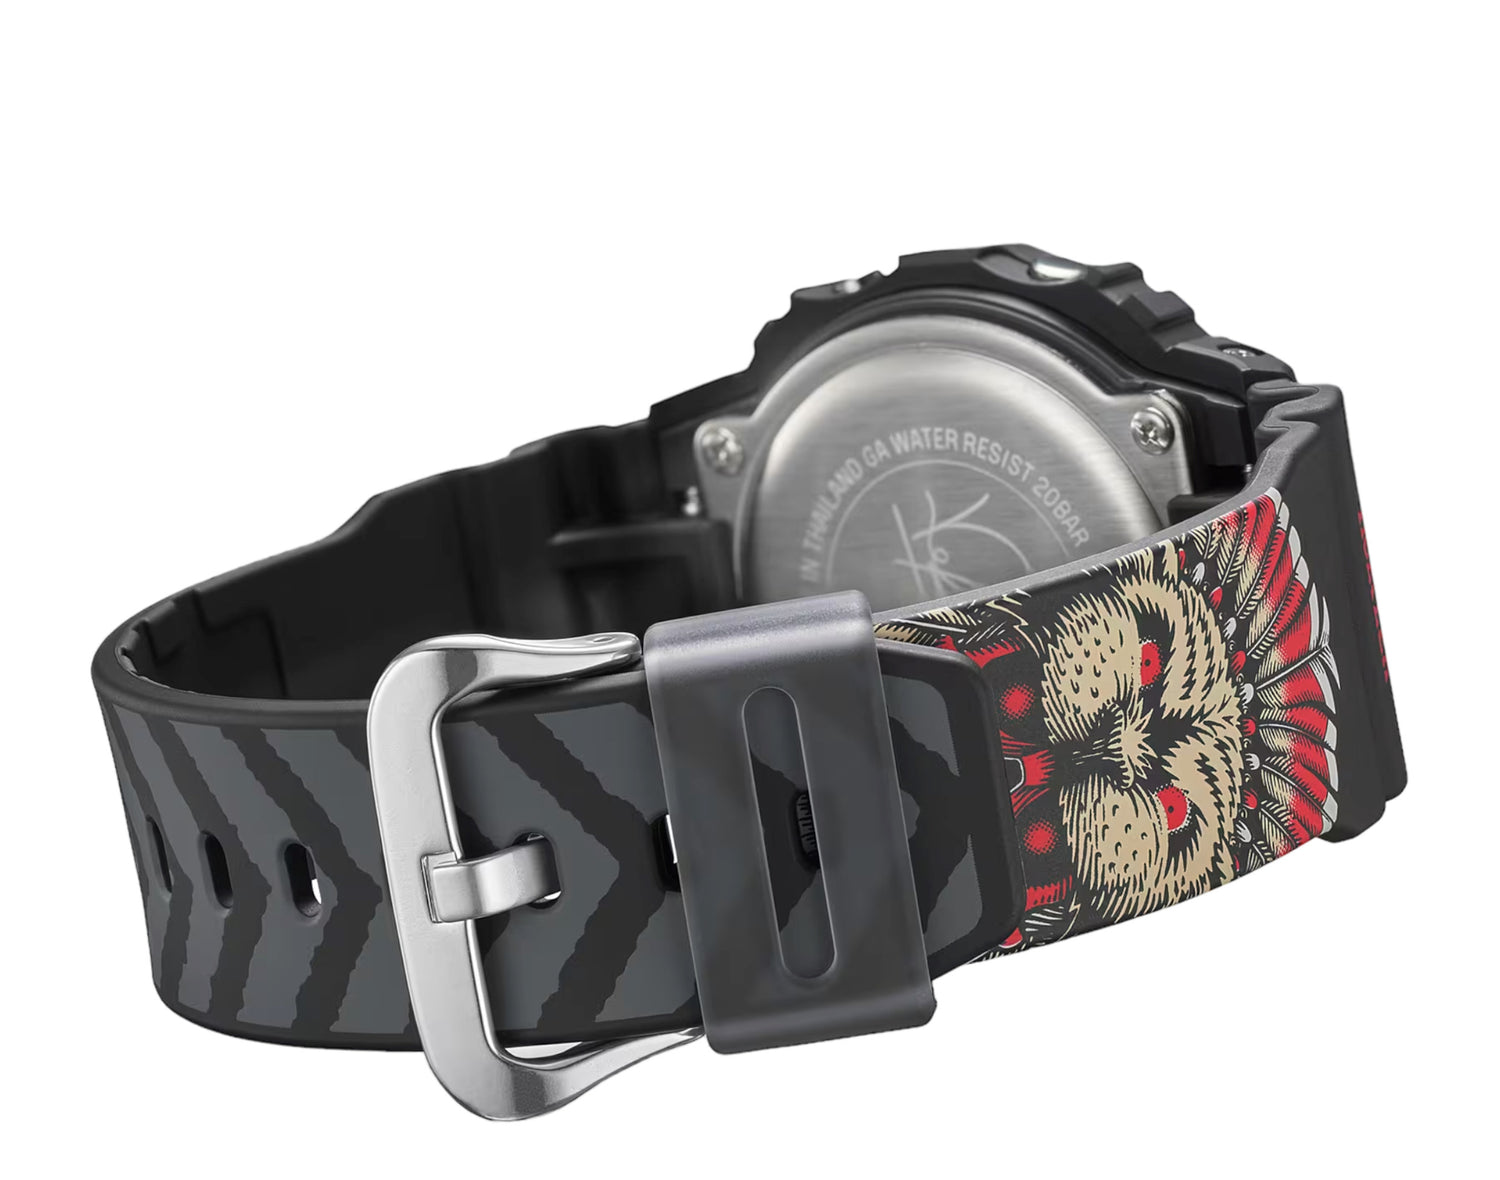 Casio G-Shock x Kelvin Hoefler x Powell Peralta DW5600KH Digital Watch